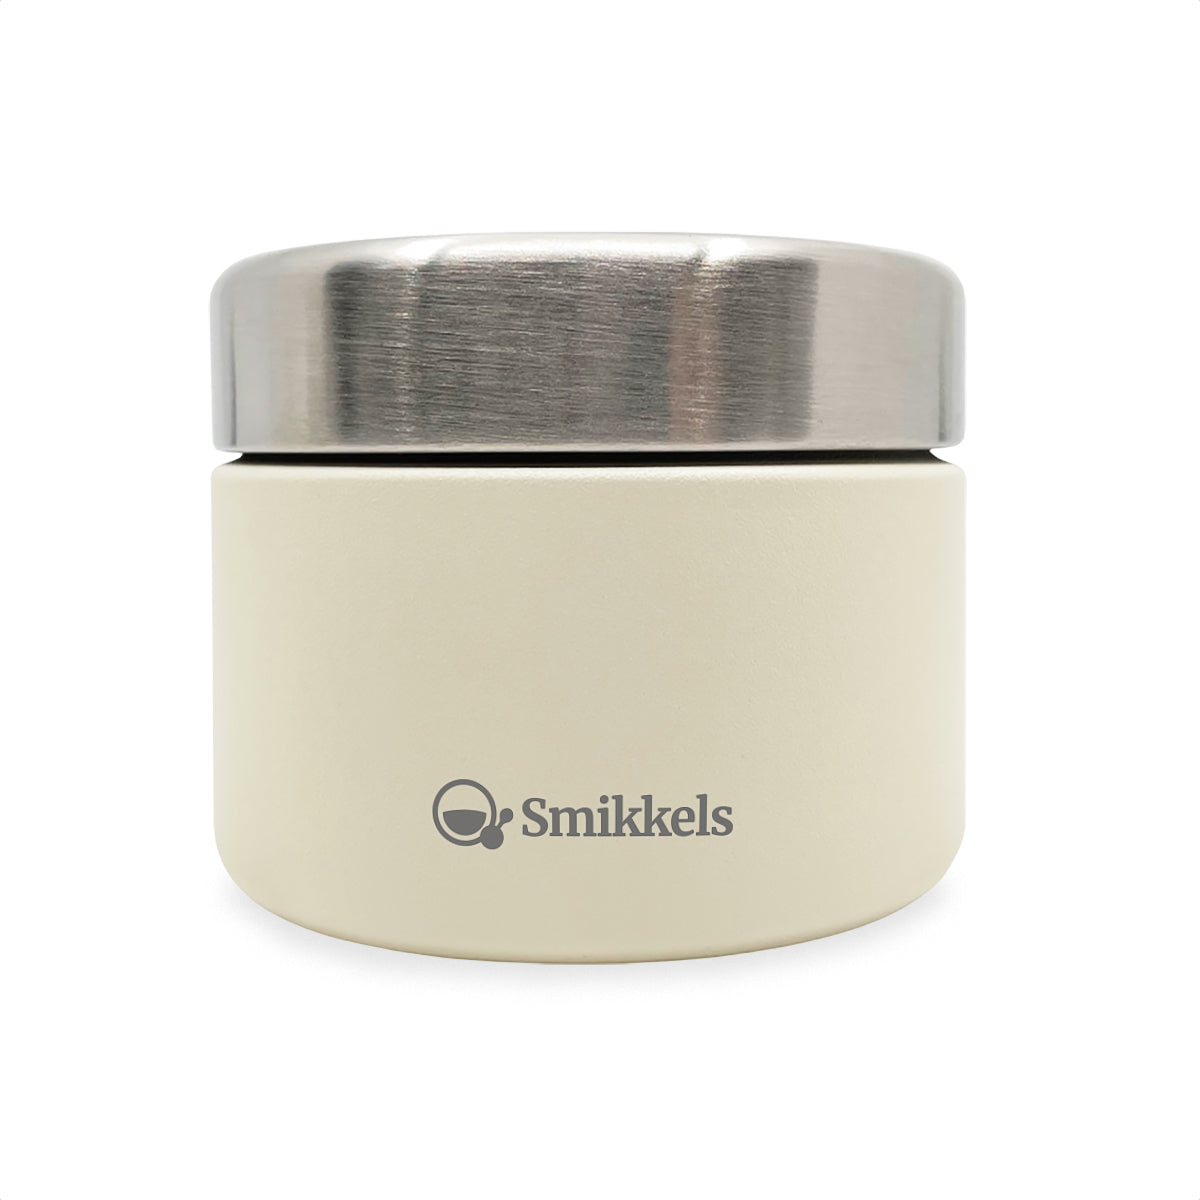 Smikkels - RVS fruit box 420 ml - white